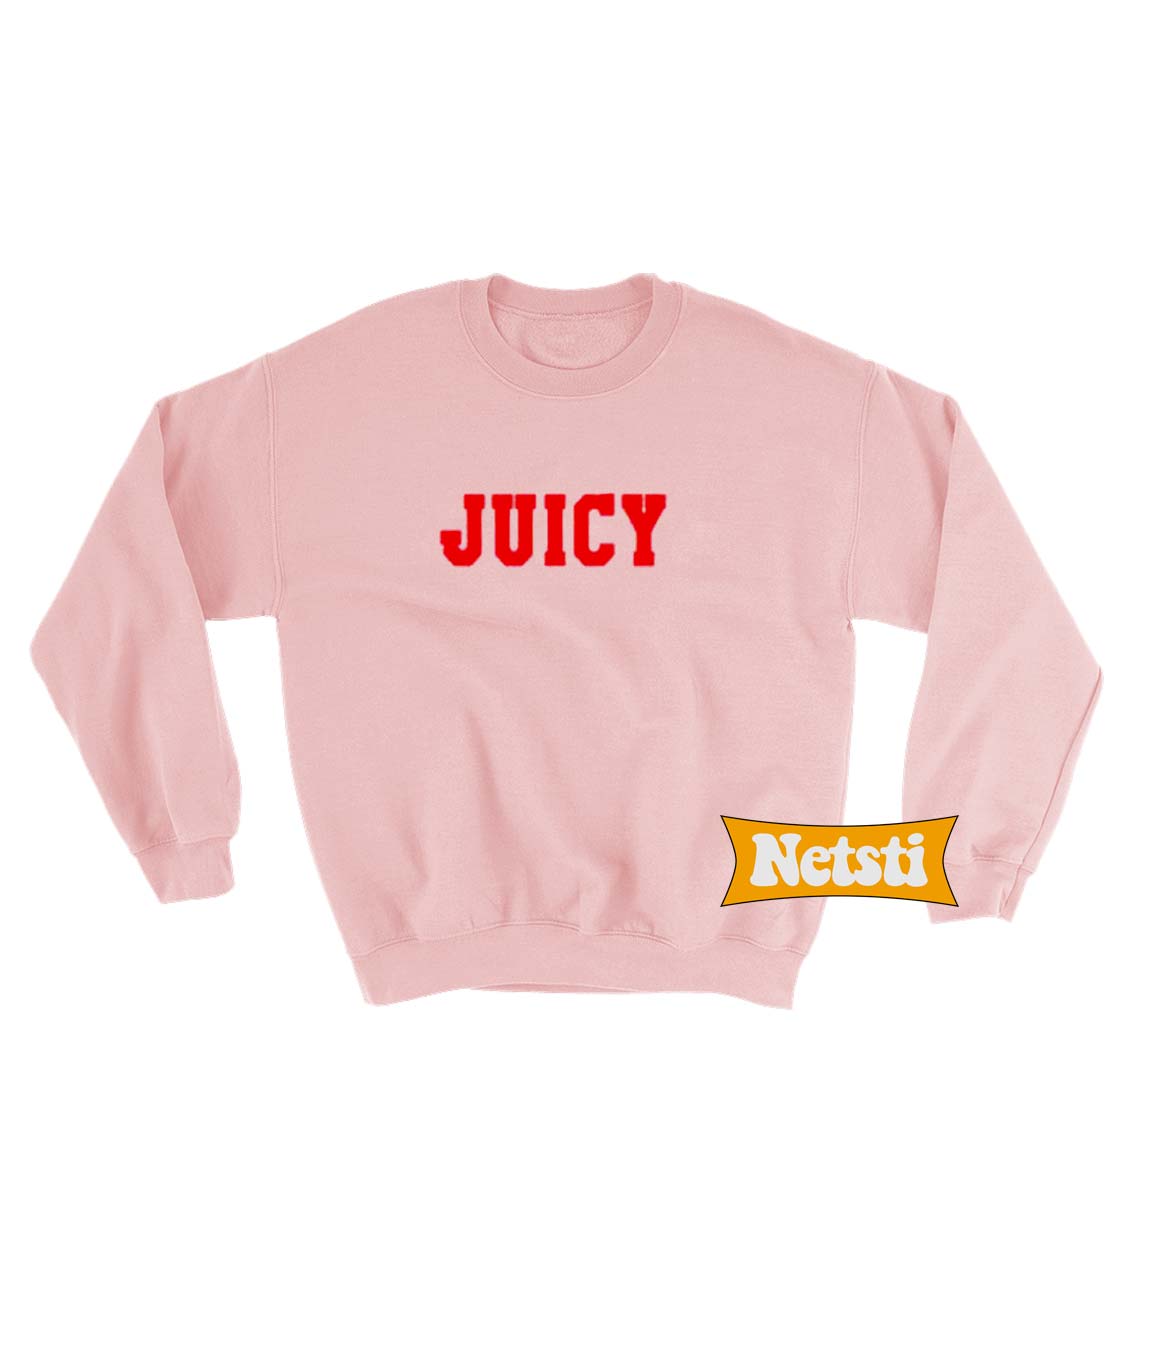 Juicy Chic Fashion Sweatshirt – Netsti Chic Fashion And Clothing Shop